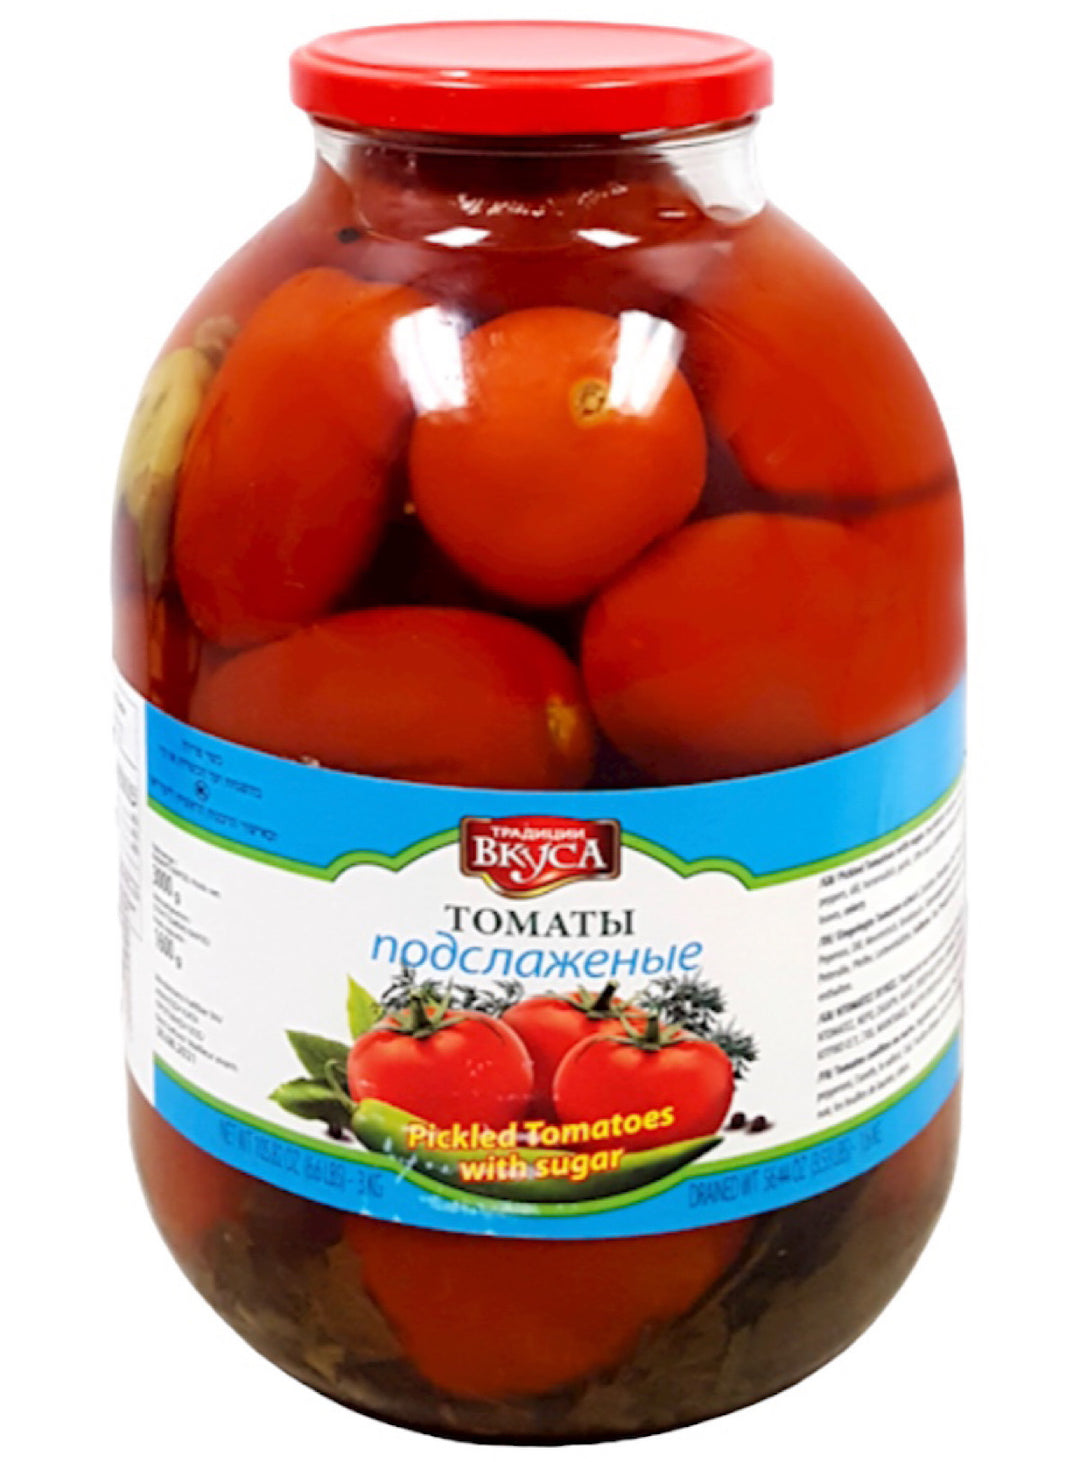 Kosher Sweet Tomatoes Pickled - Tradicll Vkusa - 3.2L